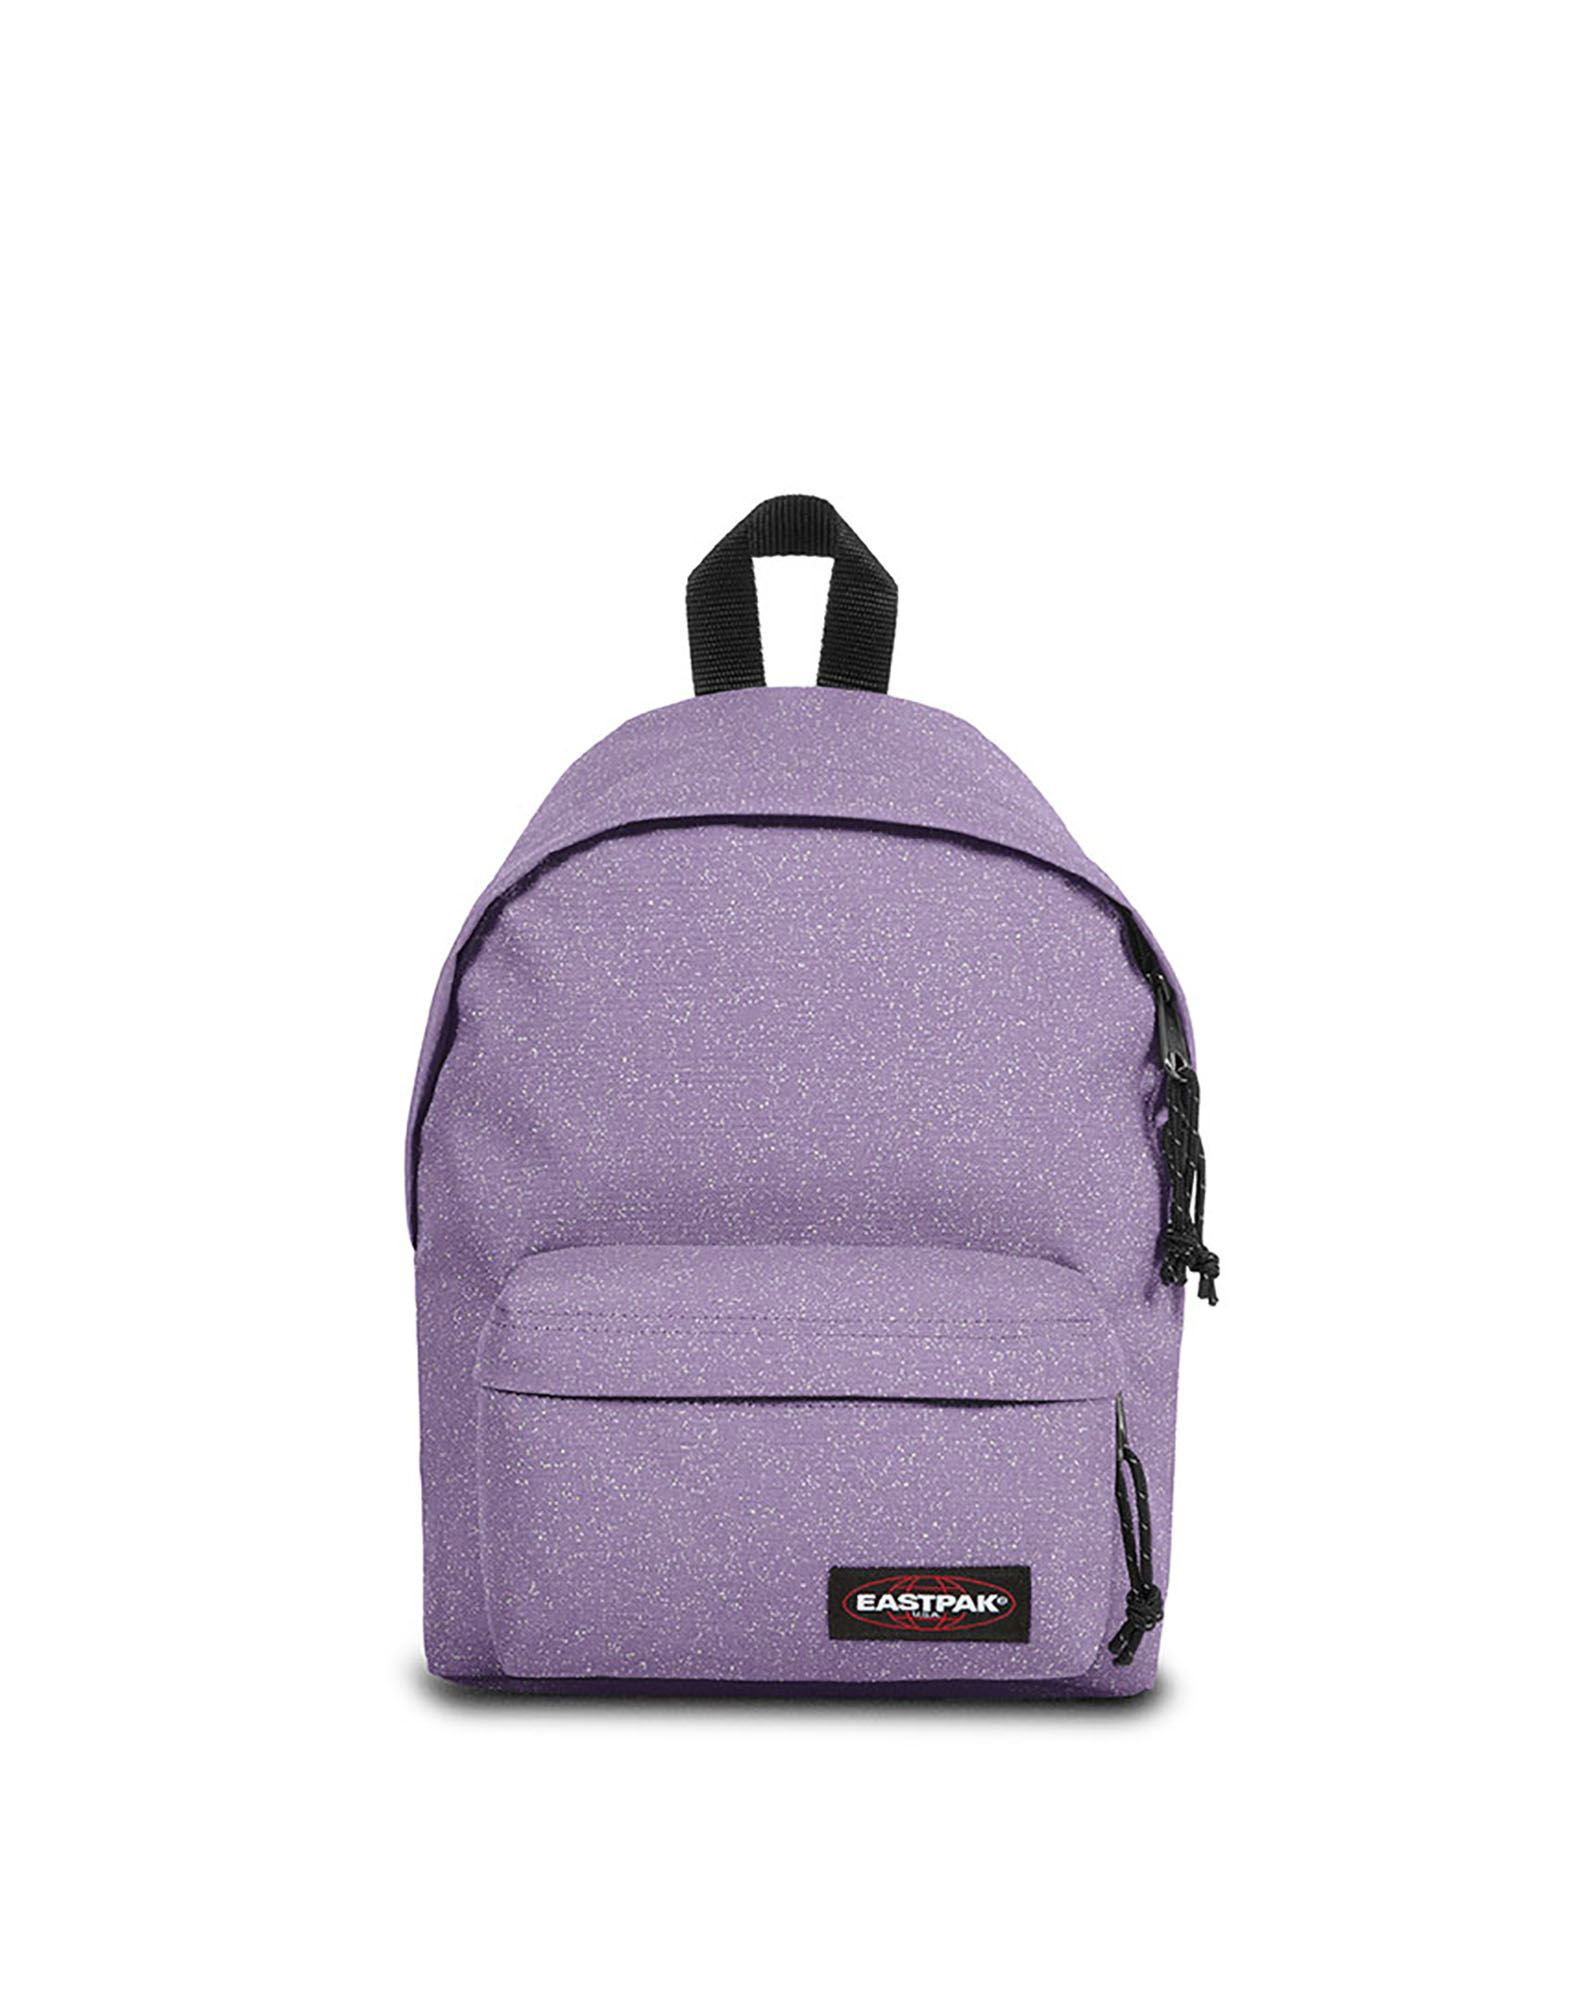 Eastpak Backpacks In Lilac